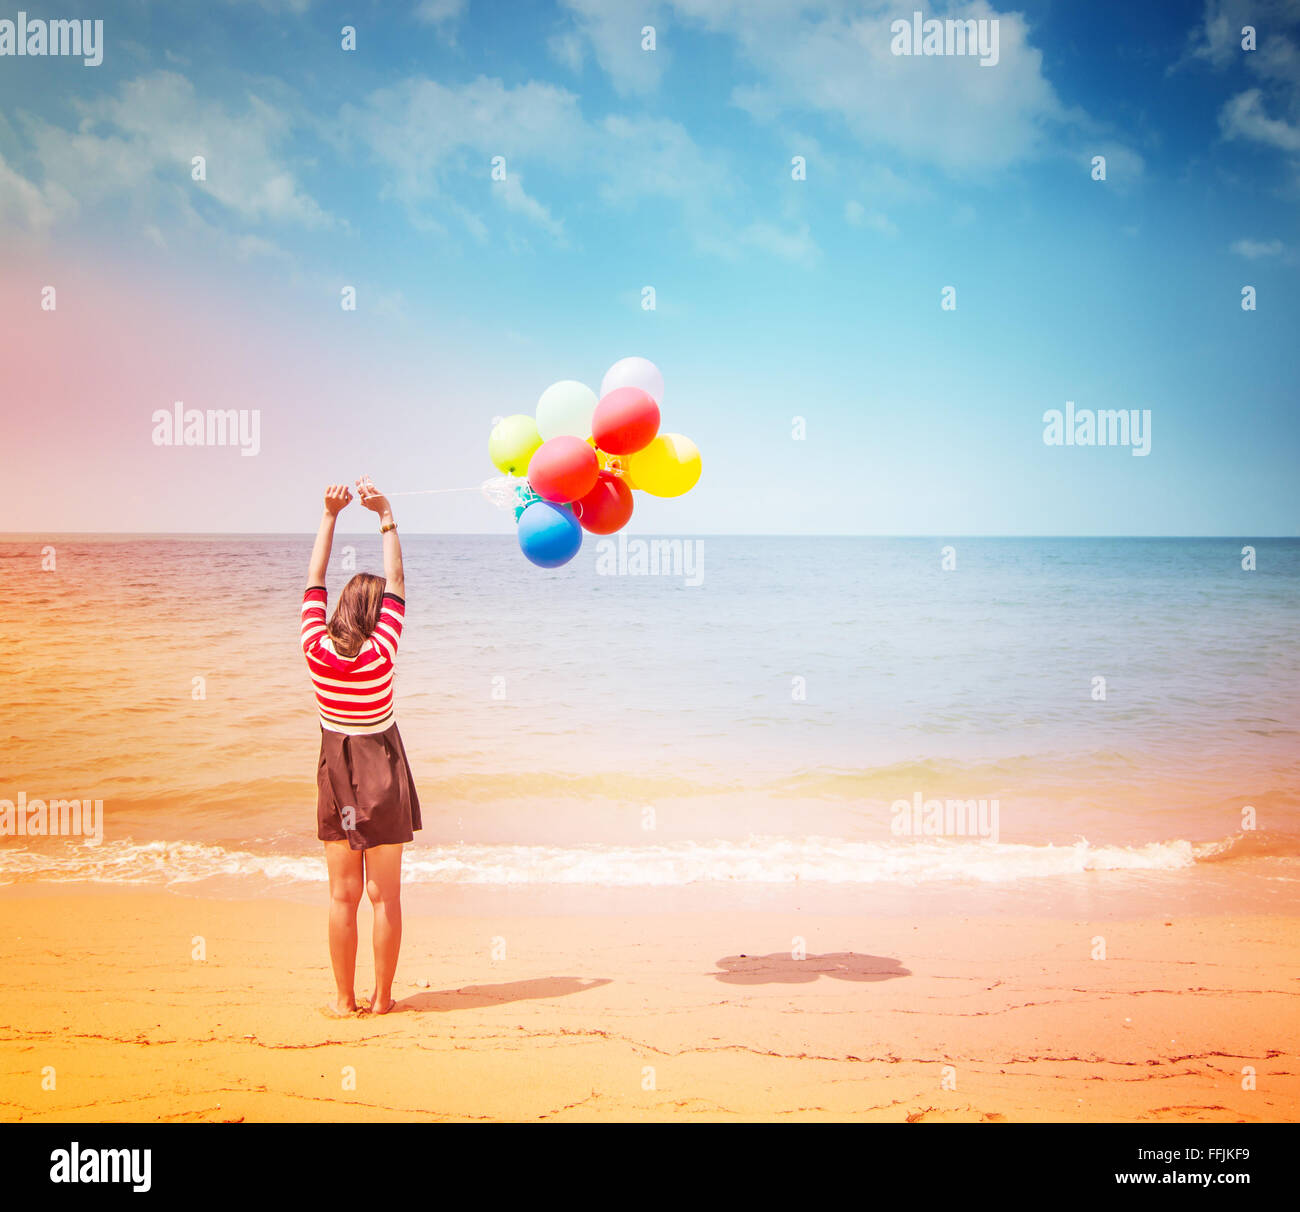 Frau mit bunten Luftballons am Strand, im freien Lebensstil Filter Bilder Stockfoto